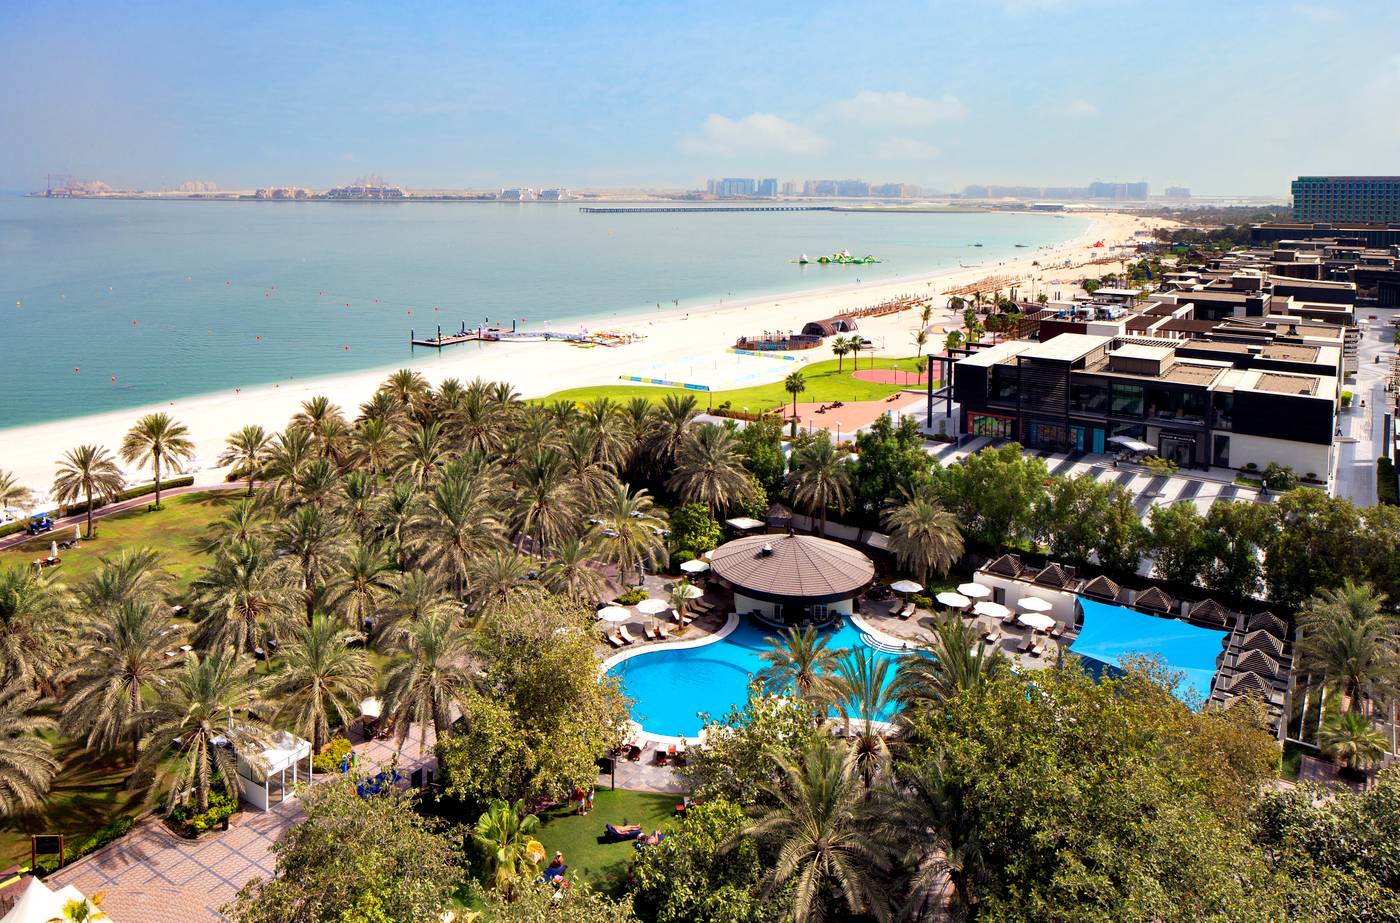 Sheraton Jumeirah Beach Resort and Towers in Dubai, United Arab Emirates